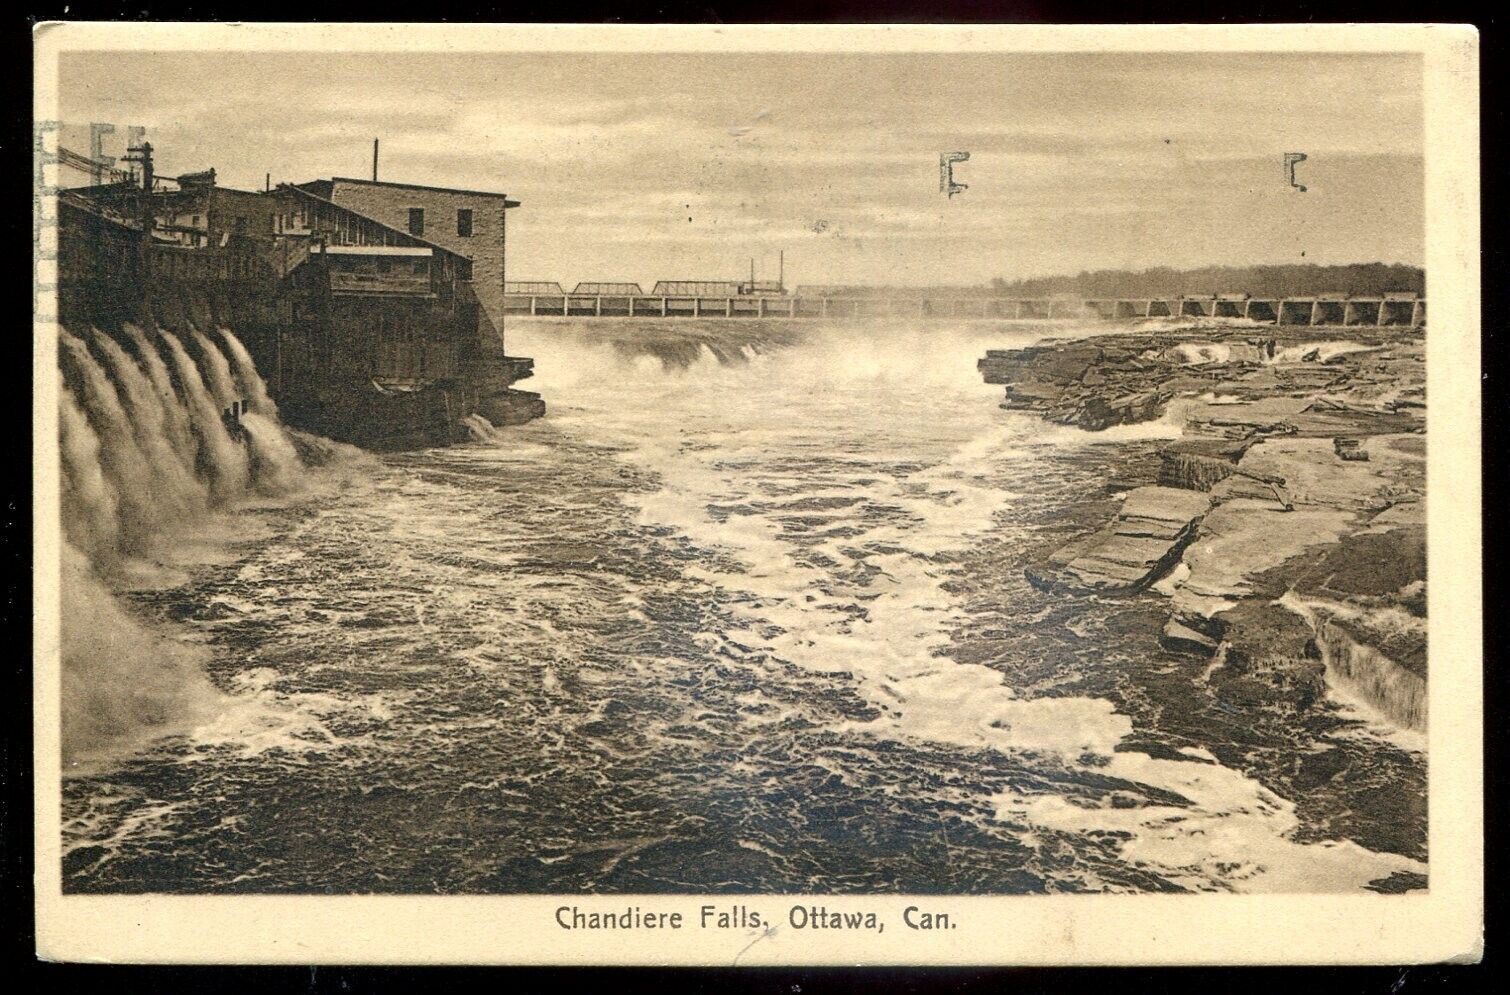 OTTAWA Ontario Postcard 1913 Chandiere Falls by ISC Picton